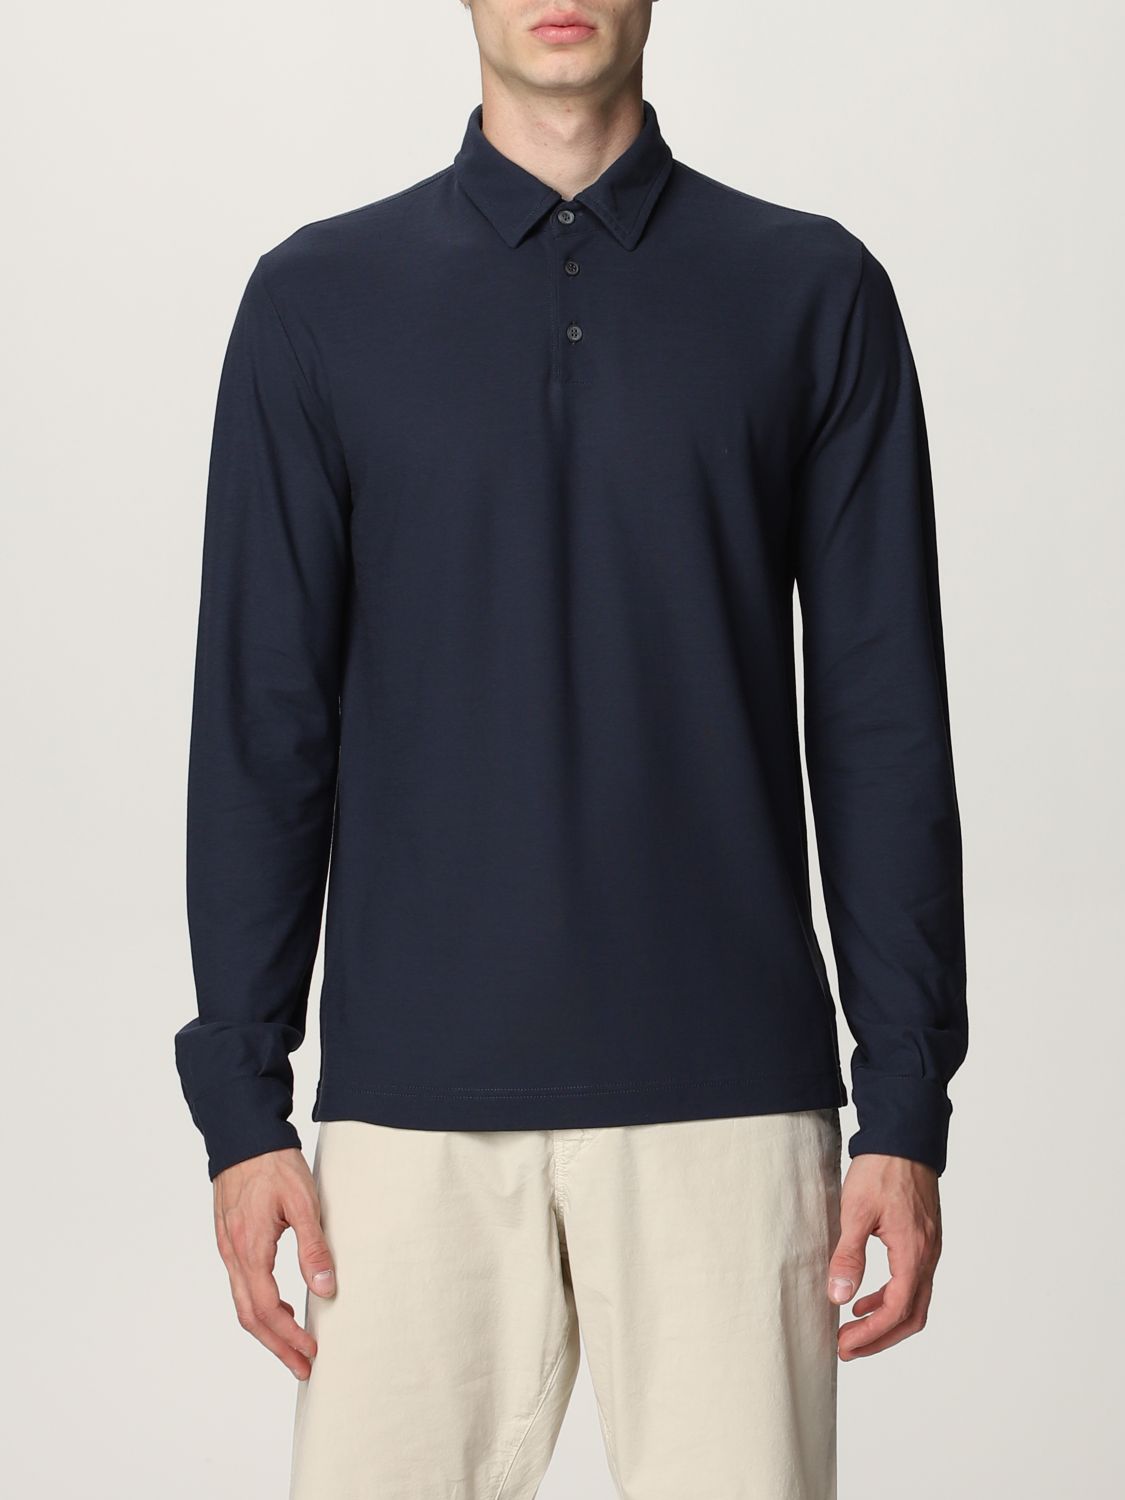 Zanone Outlet: polo shirt for man - Blue | Zanone polo shirt 811819 ...